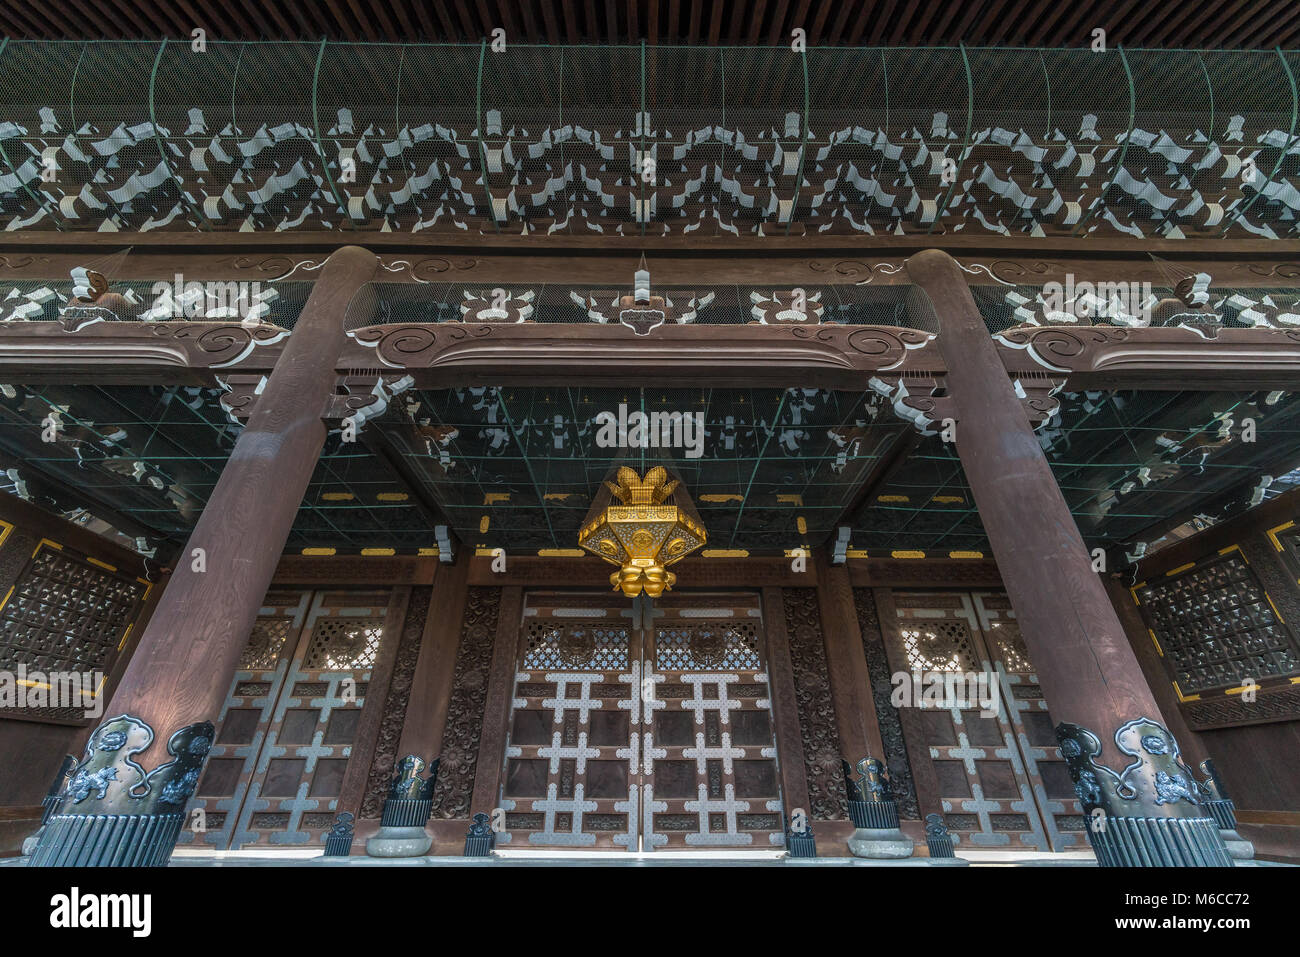 Weitwinkelaufnahme der schönen Hishidoro hanging lantern an der Gründer Halle Tor (Goei - Mon) Shinshu Otani-ha oder Higashi Hongan-ji. Stockfoto